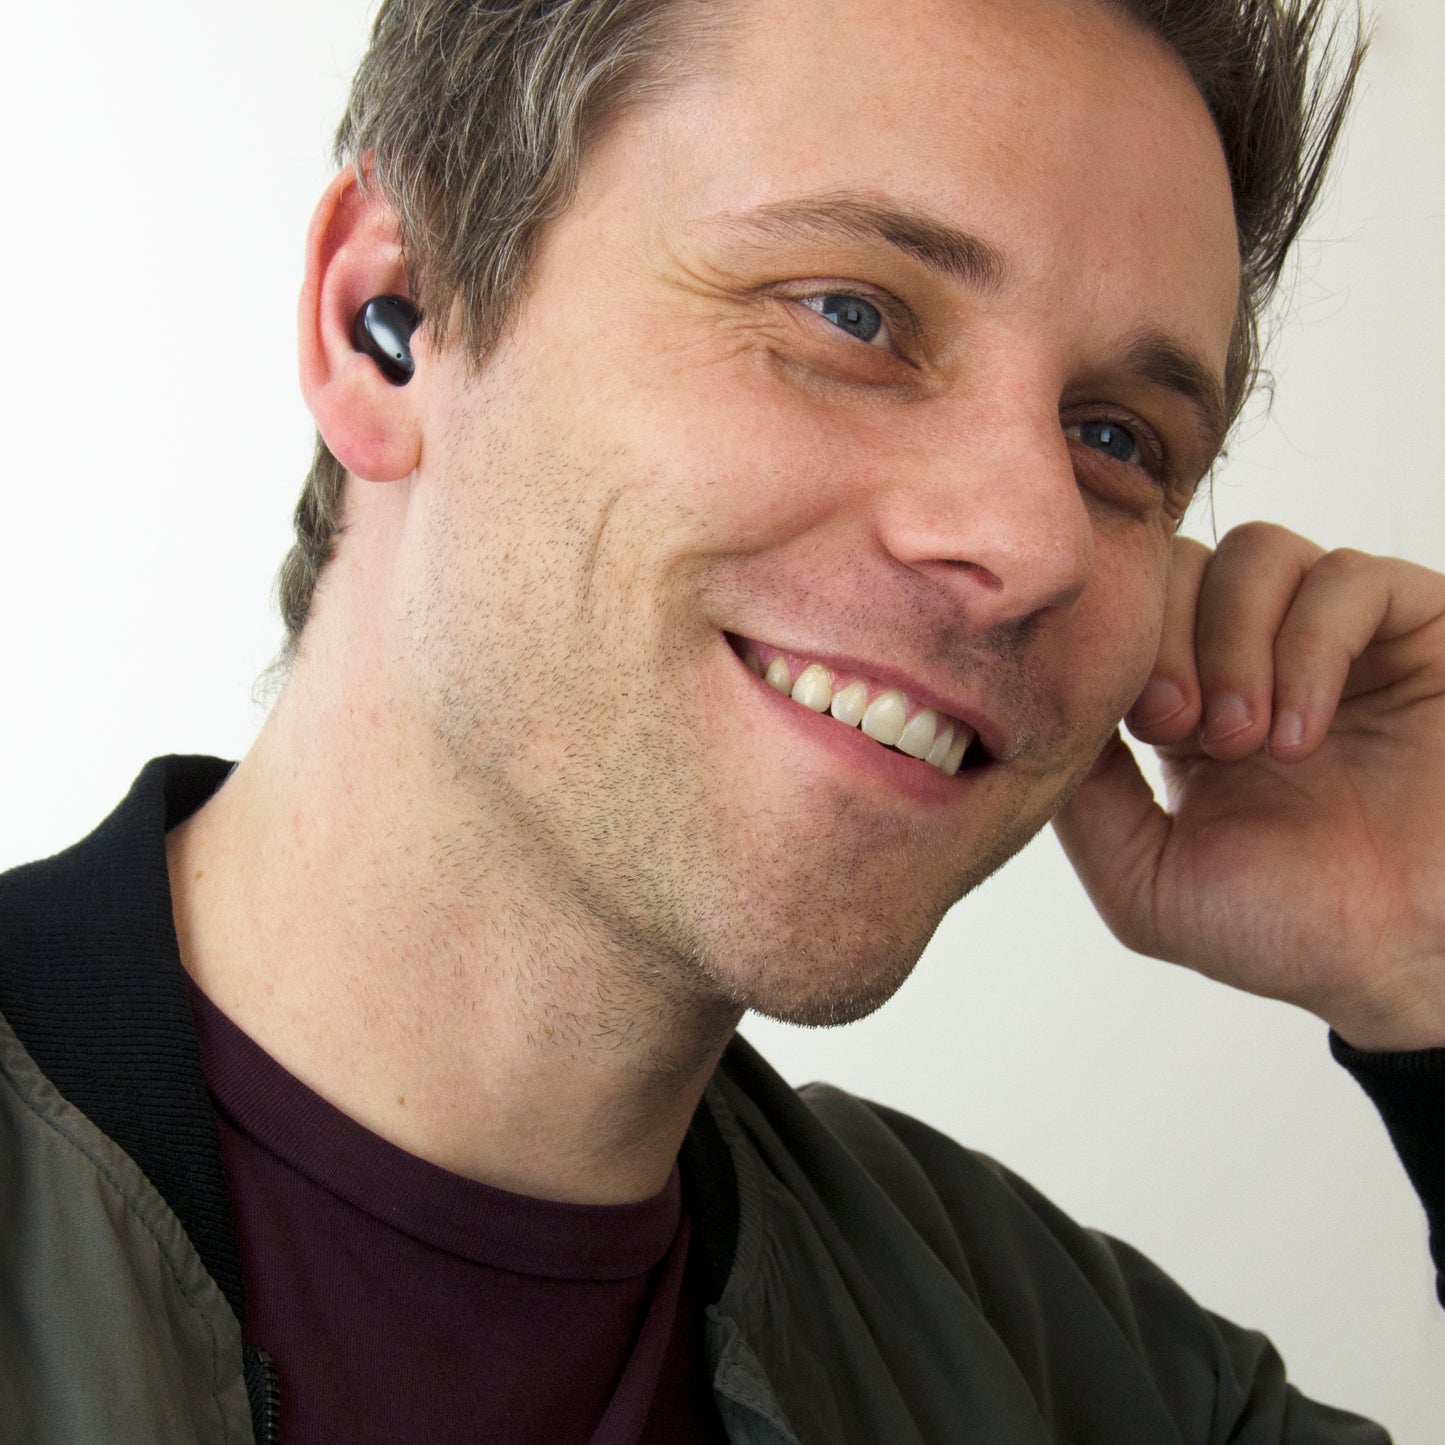 MEE Audio - Pebbles Wireless In Ear Headphones